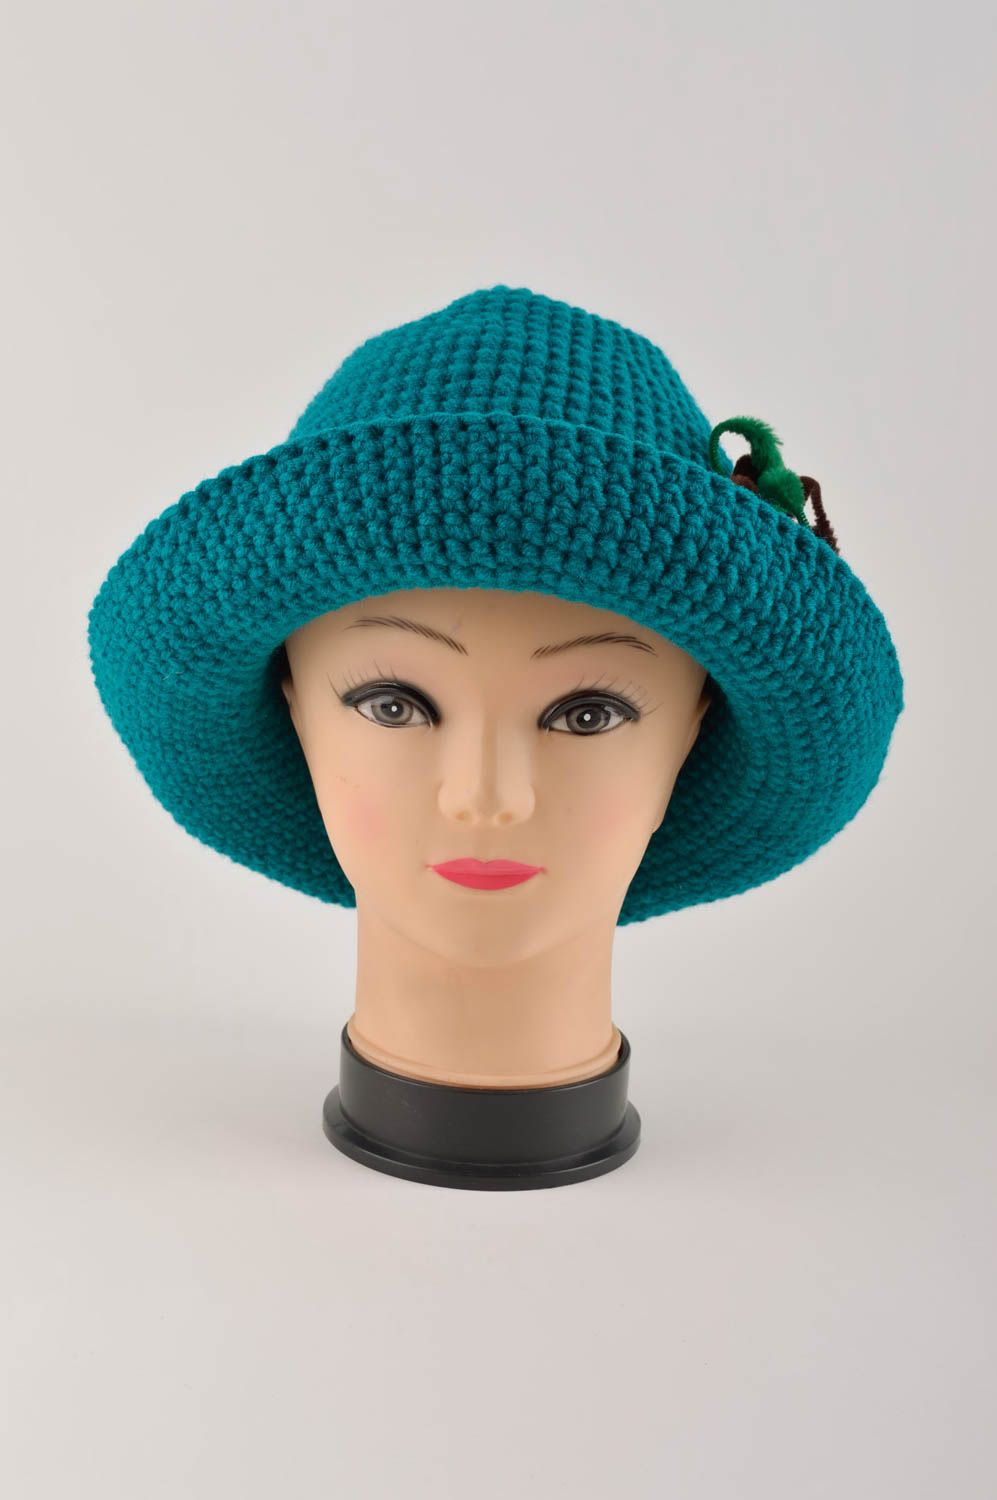 Handmade hat designer hat unusual headwear for girls gift ideas hat for coat photo 3